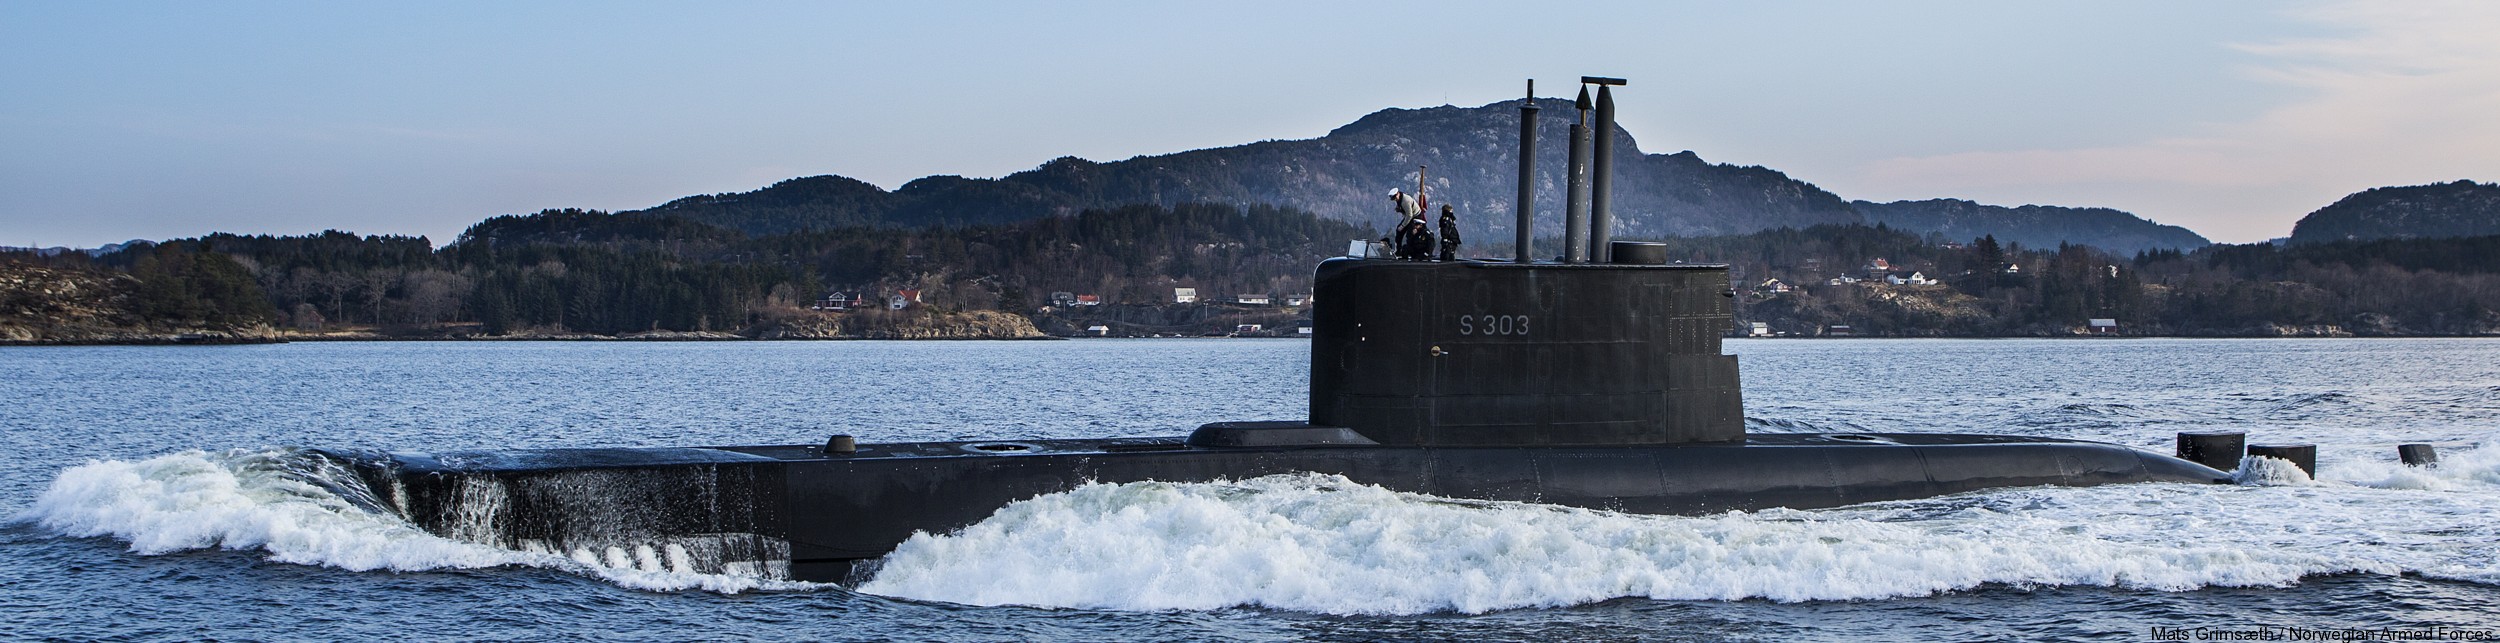 s-303 hnoms knm utvaer ula class submarine type 210 attack ssk undervannsbåt royal norwegian navy sjøforsvaret 21